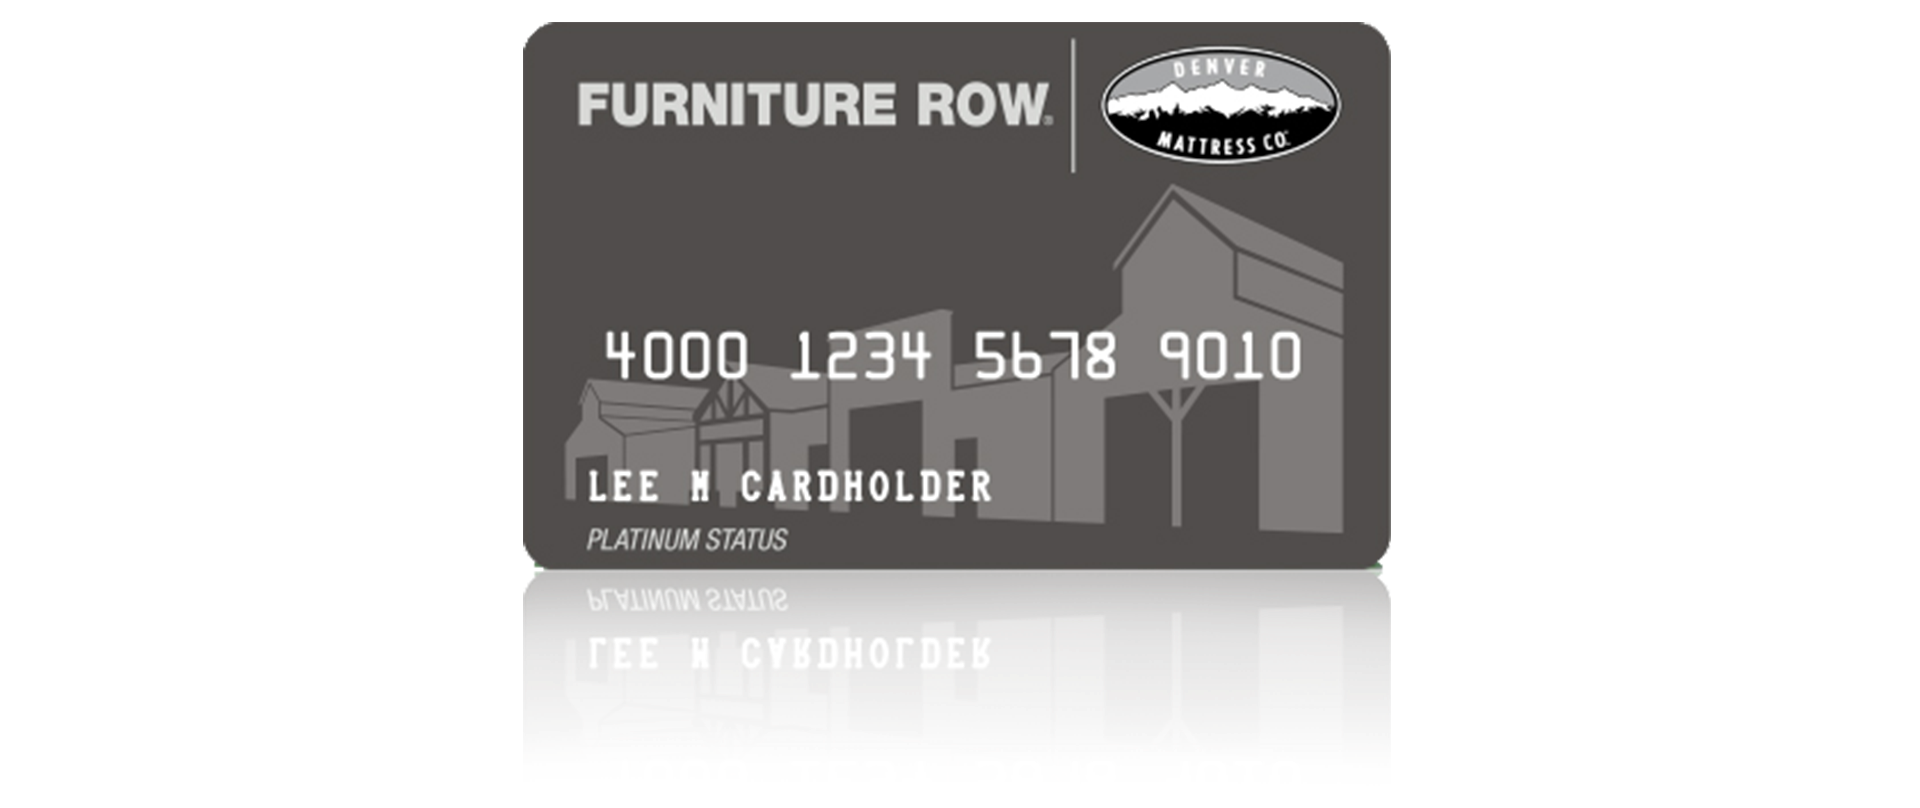 Furniture Row Credit Card